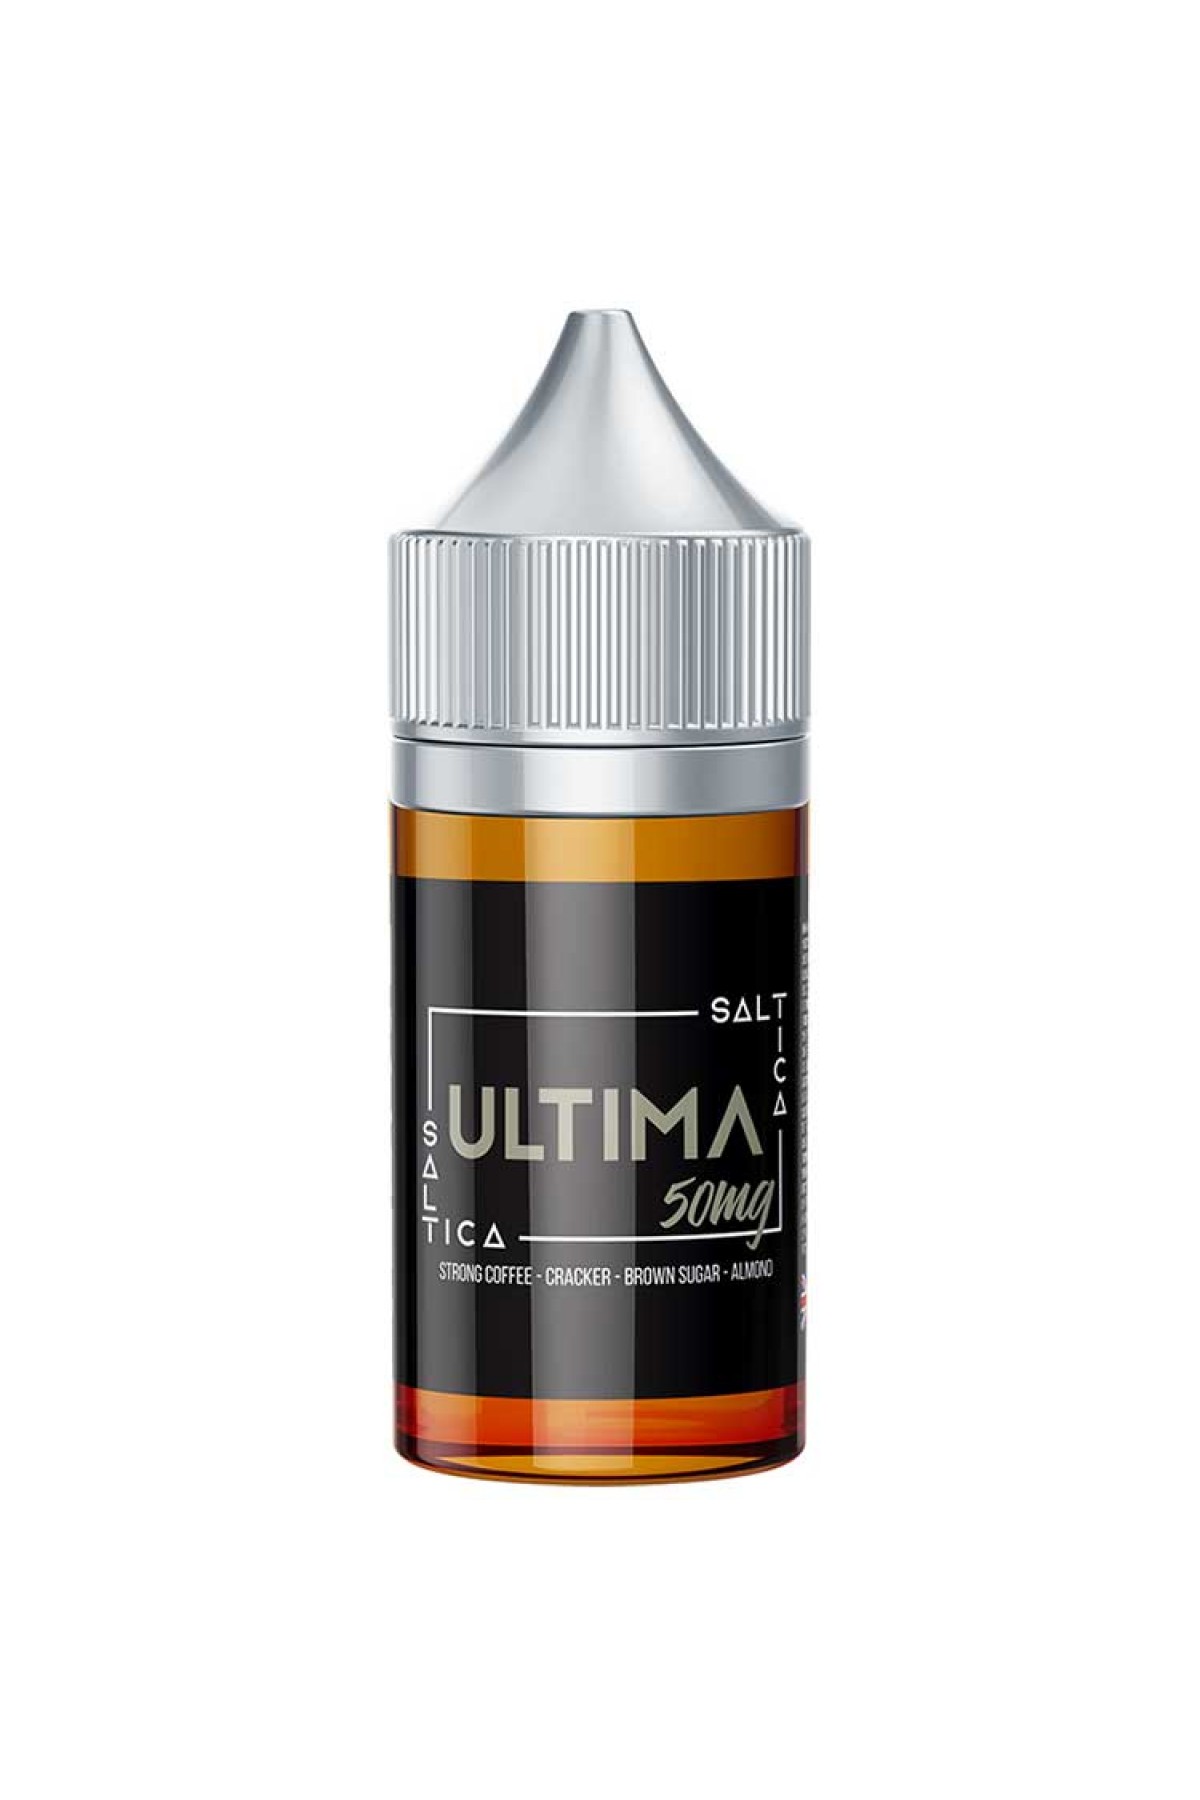 Saltica - Ultima Salt Likit (Kahve, Kraker, Badem, Esmer Şeker) (30ML)